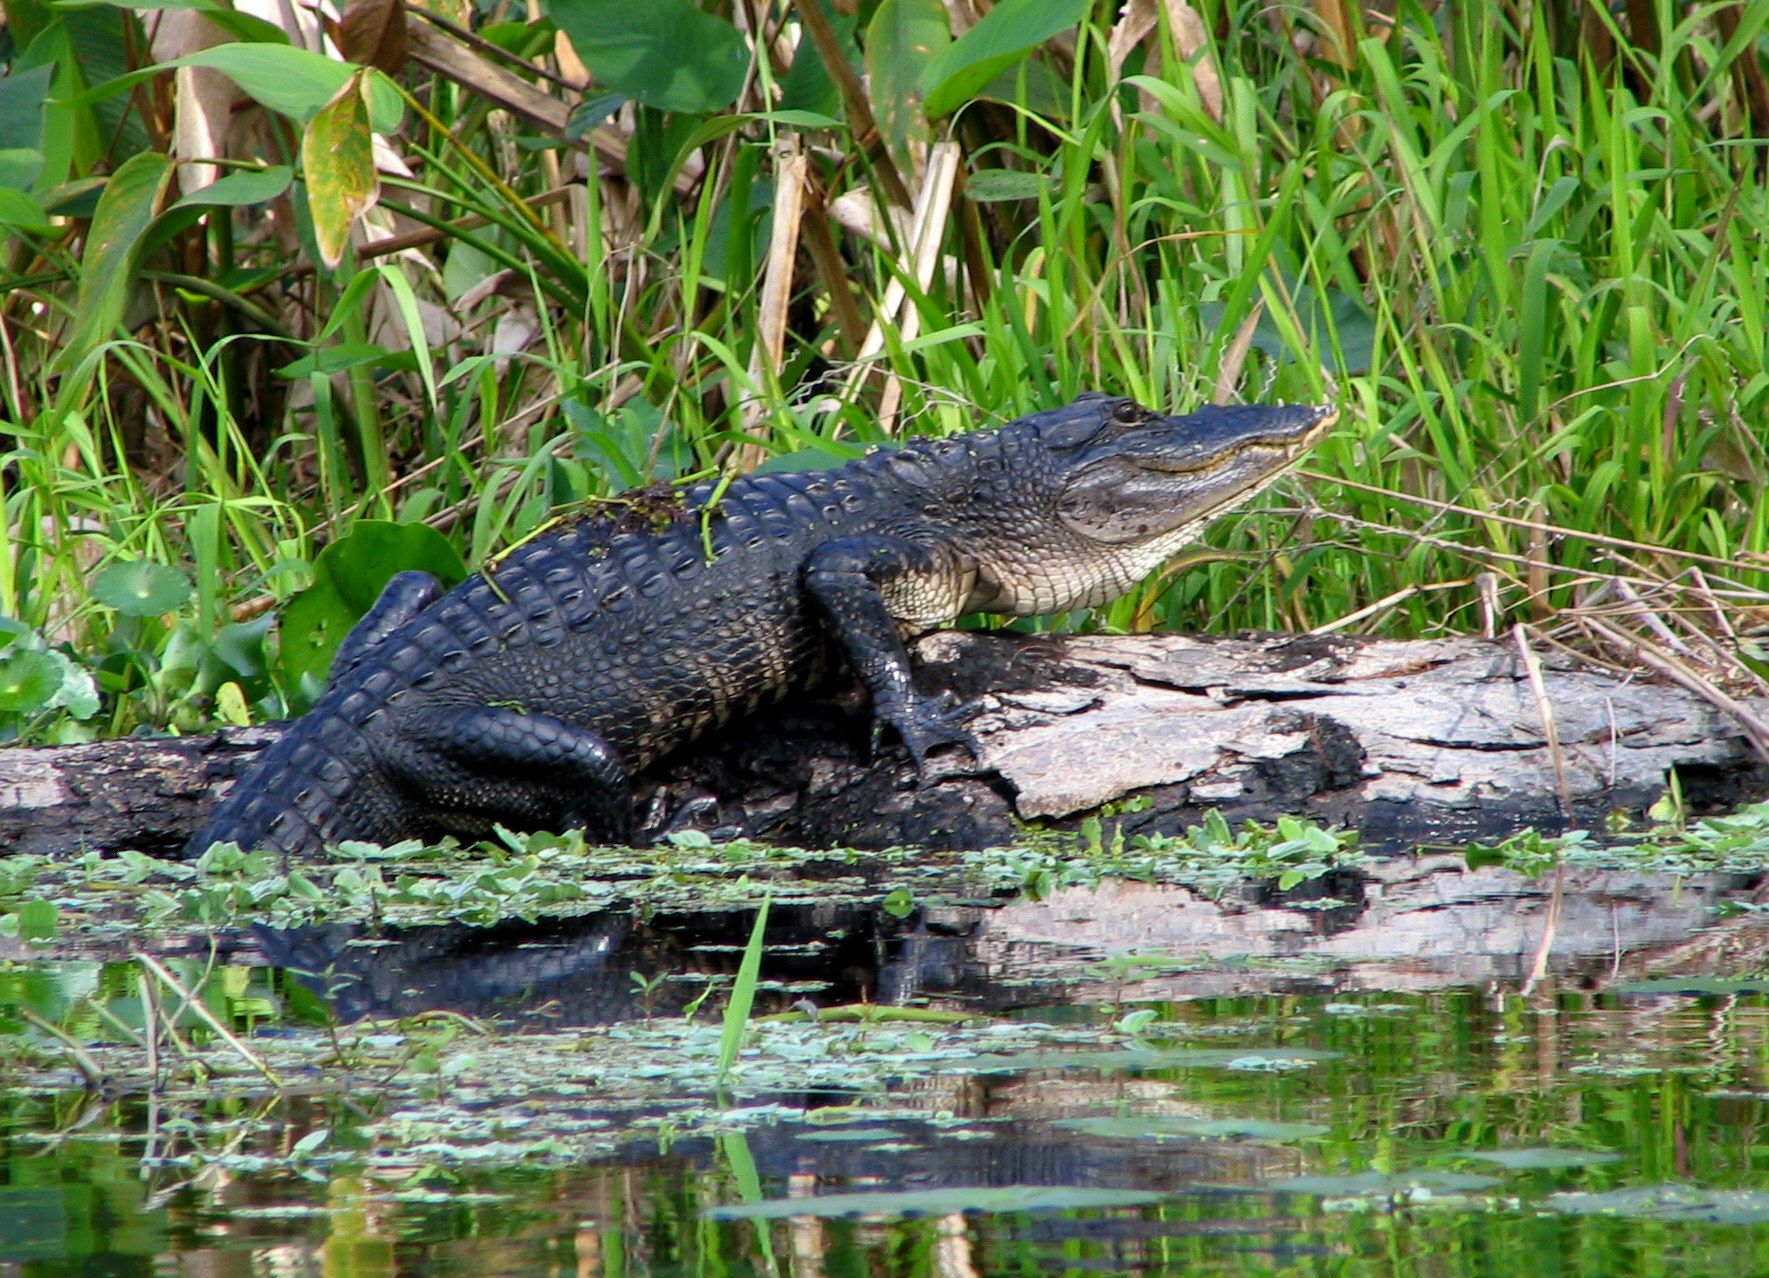 Alligators Spotted in a North Georgia river.